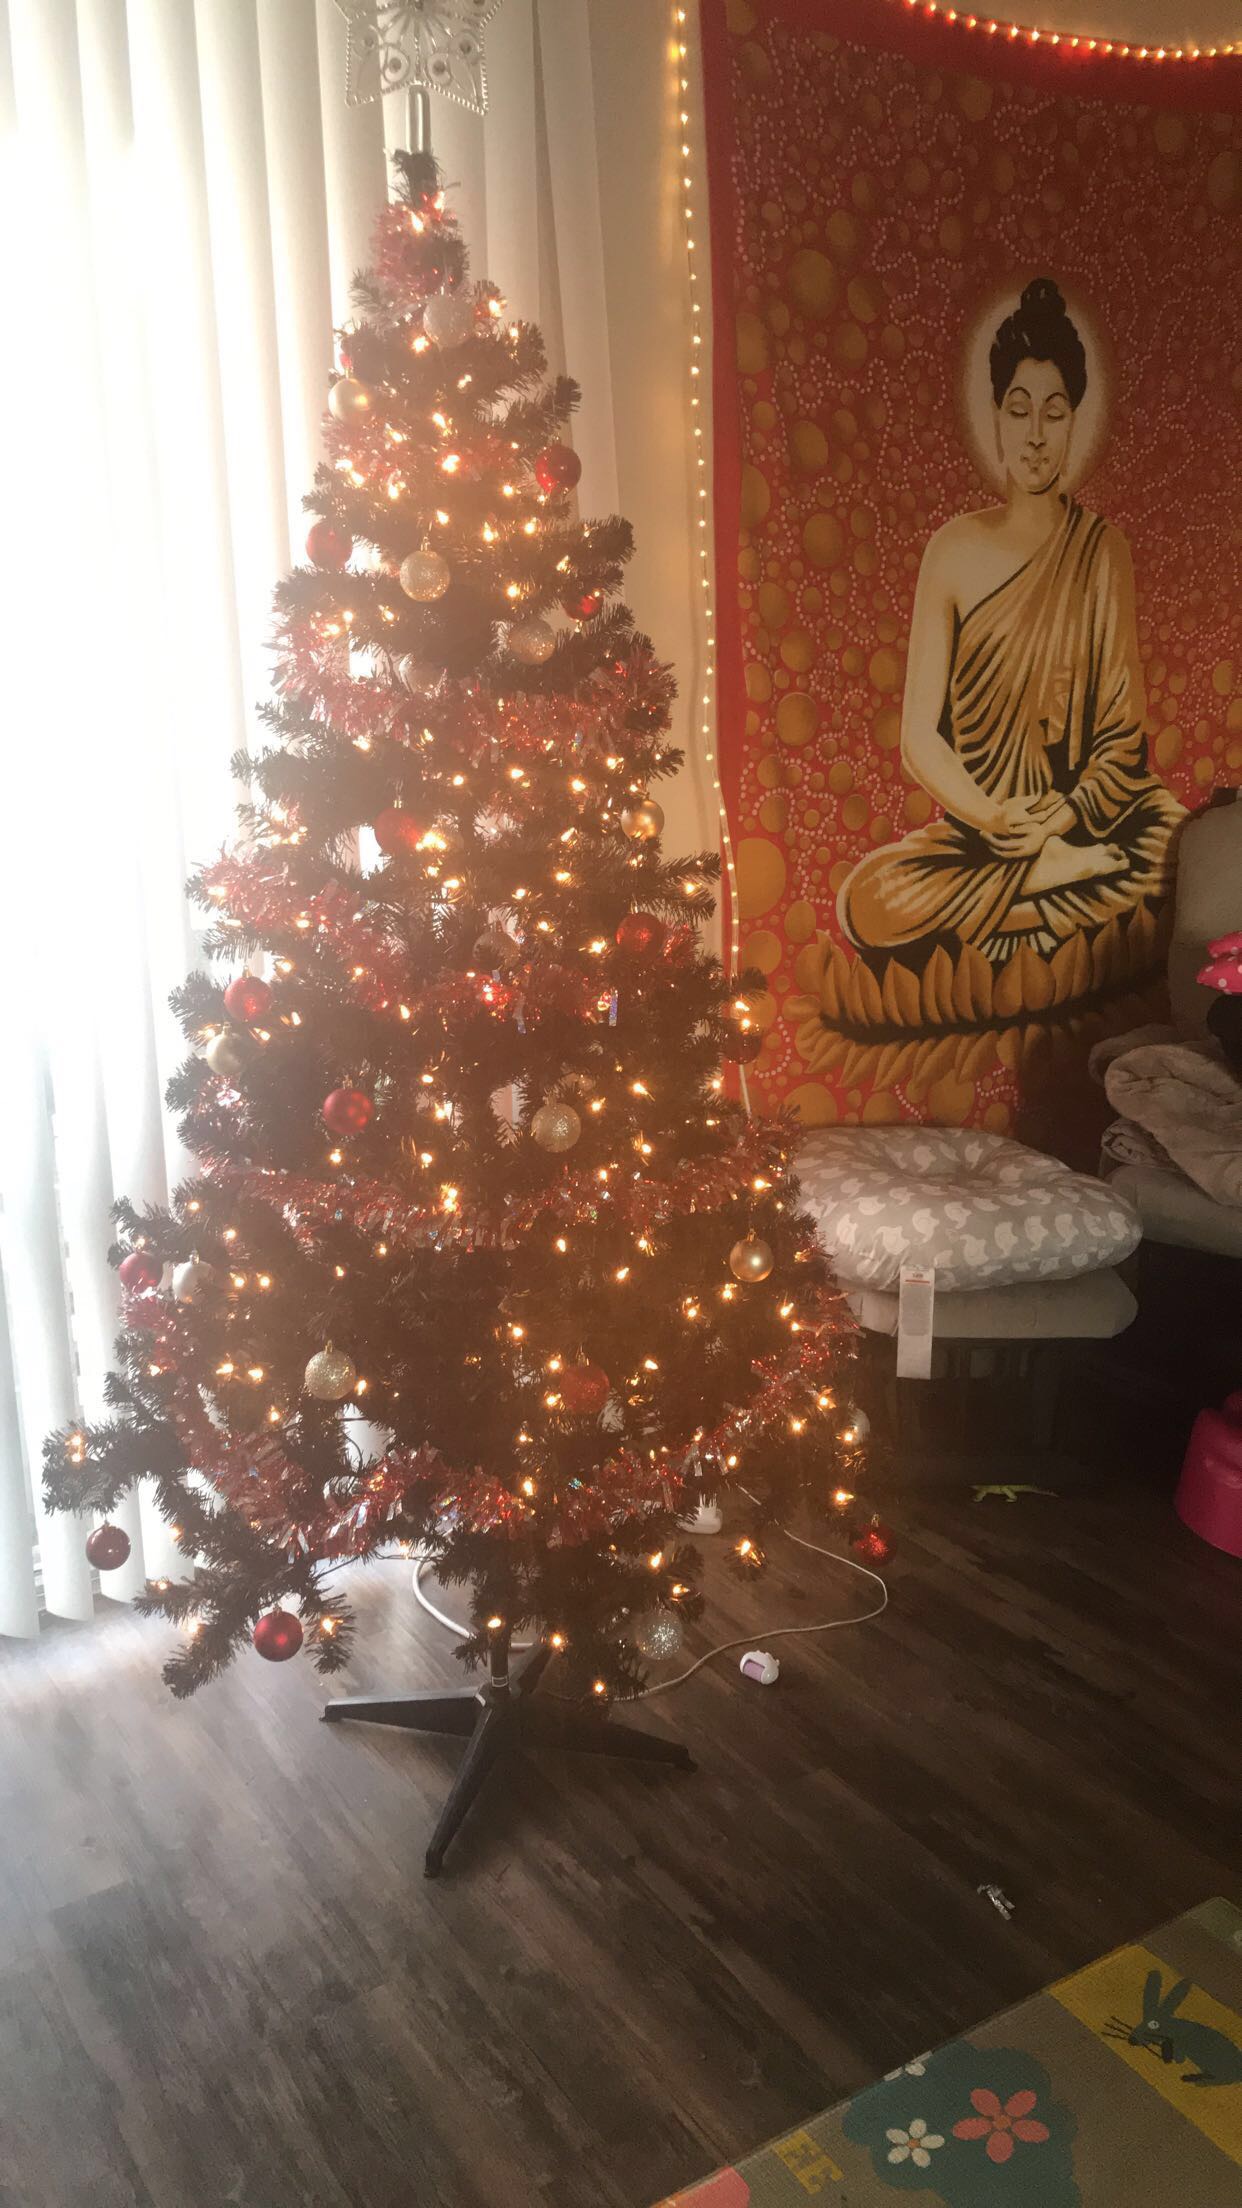 My Black Christmas Tree with My Buddha! Bohemian Christmas and Winter Solstice Season!